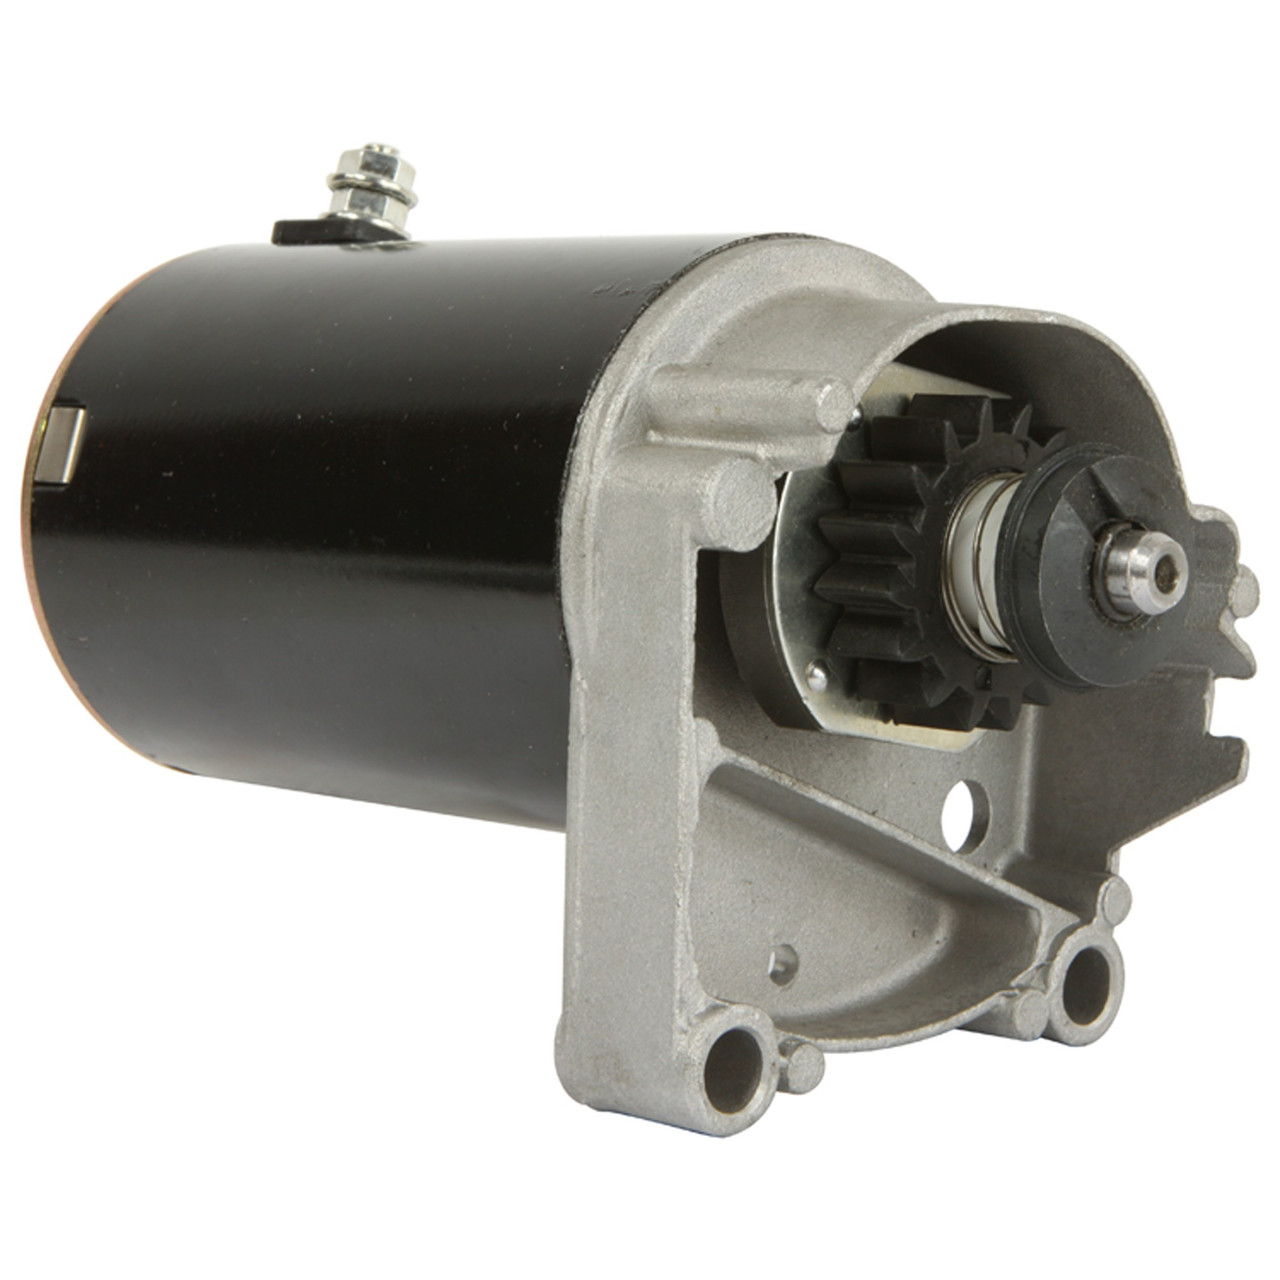 Starter Motor for Briggs V Twin Cylinder HD 14 16 18 HP 410-22010